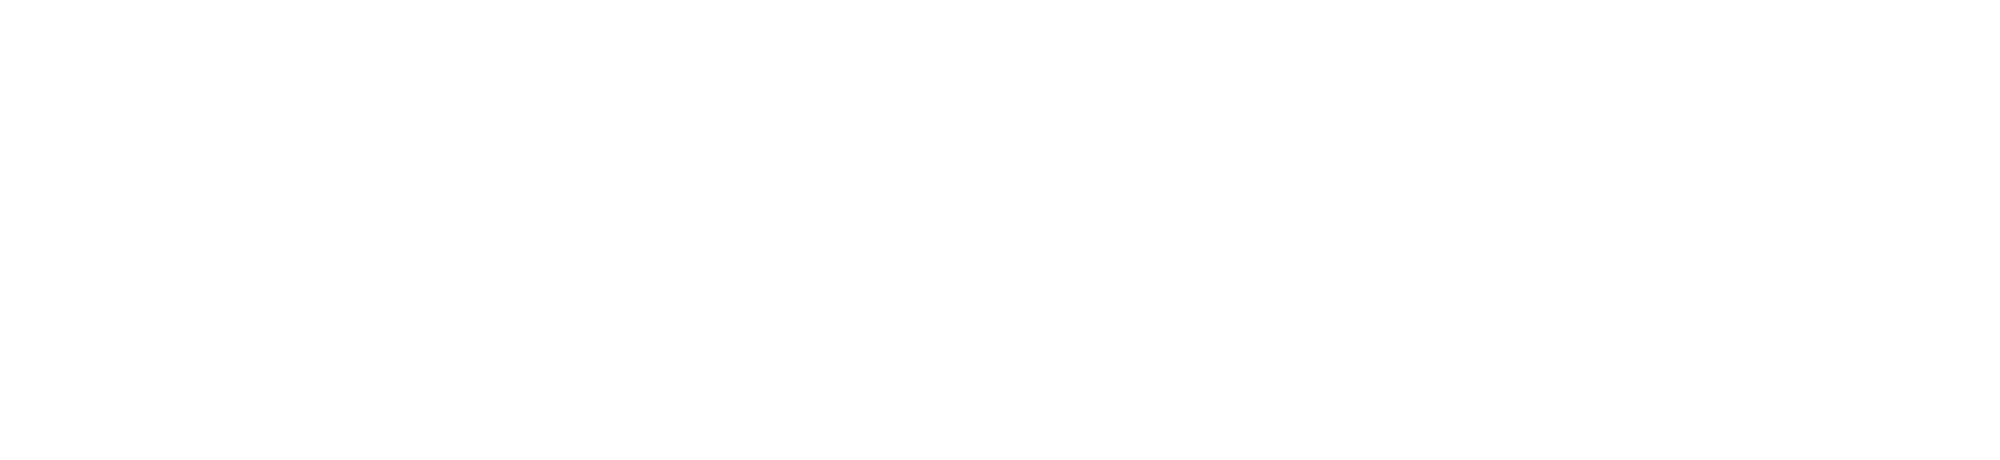 dark souls series site